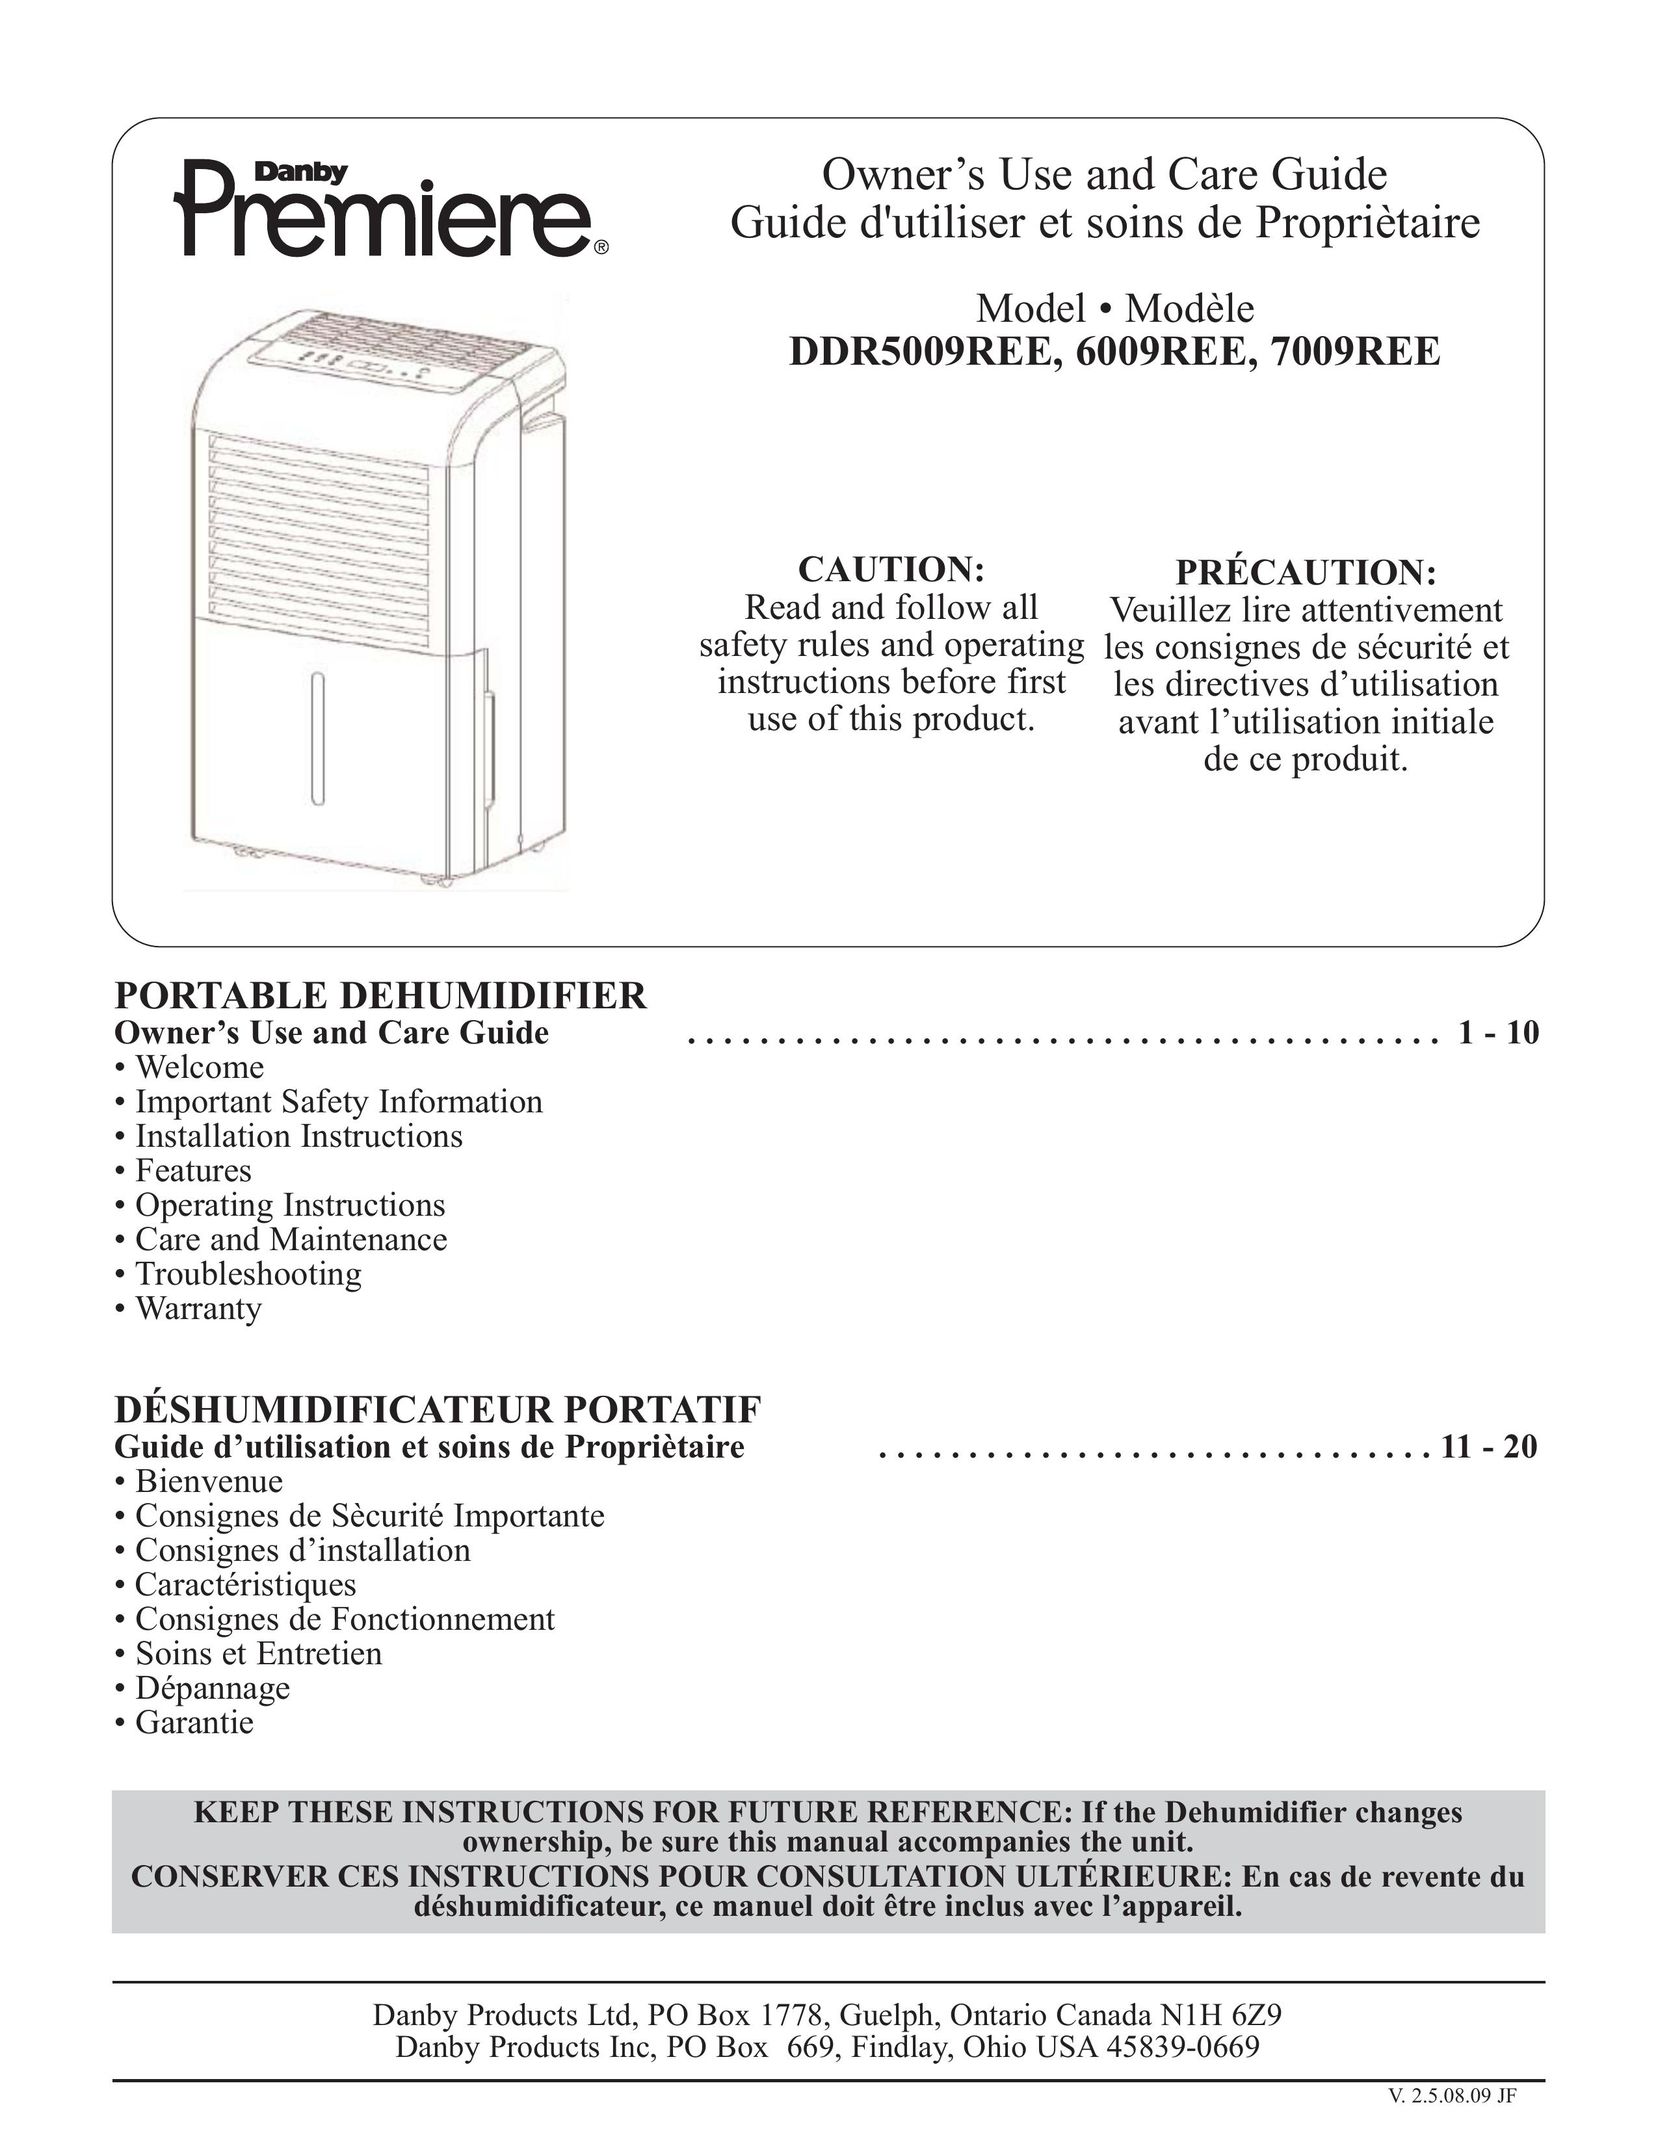 Danby 7009REE Dehumidifier User Manual